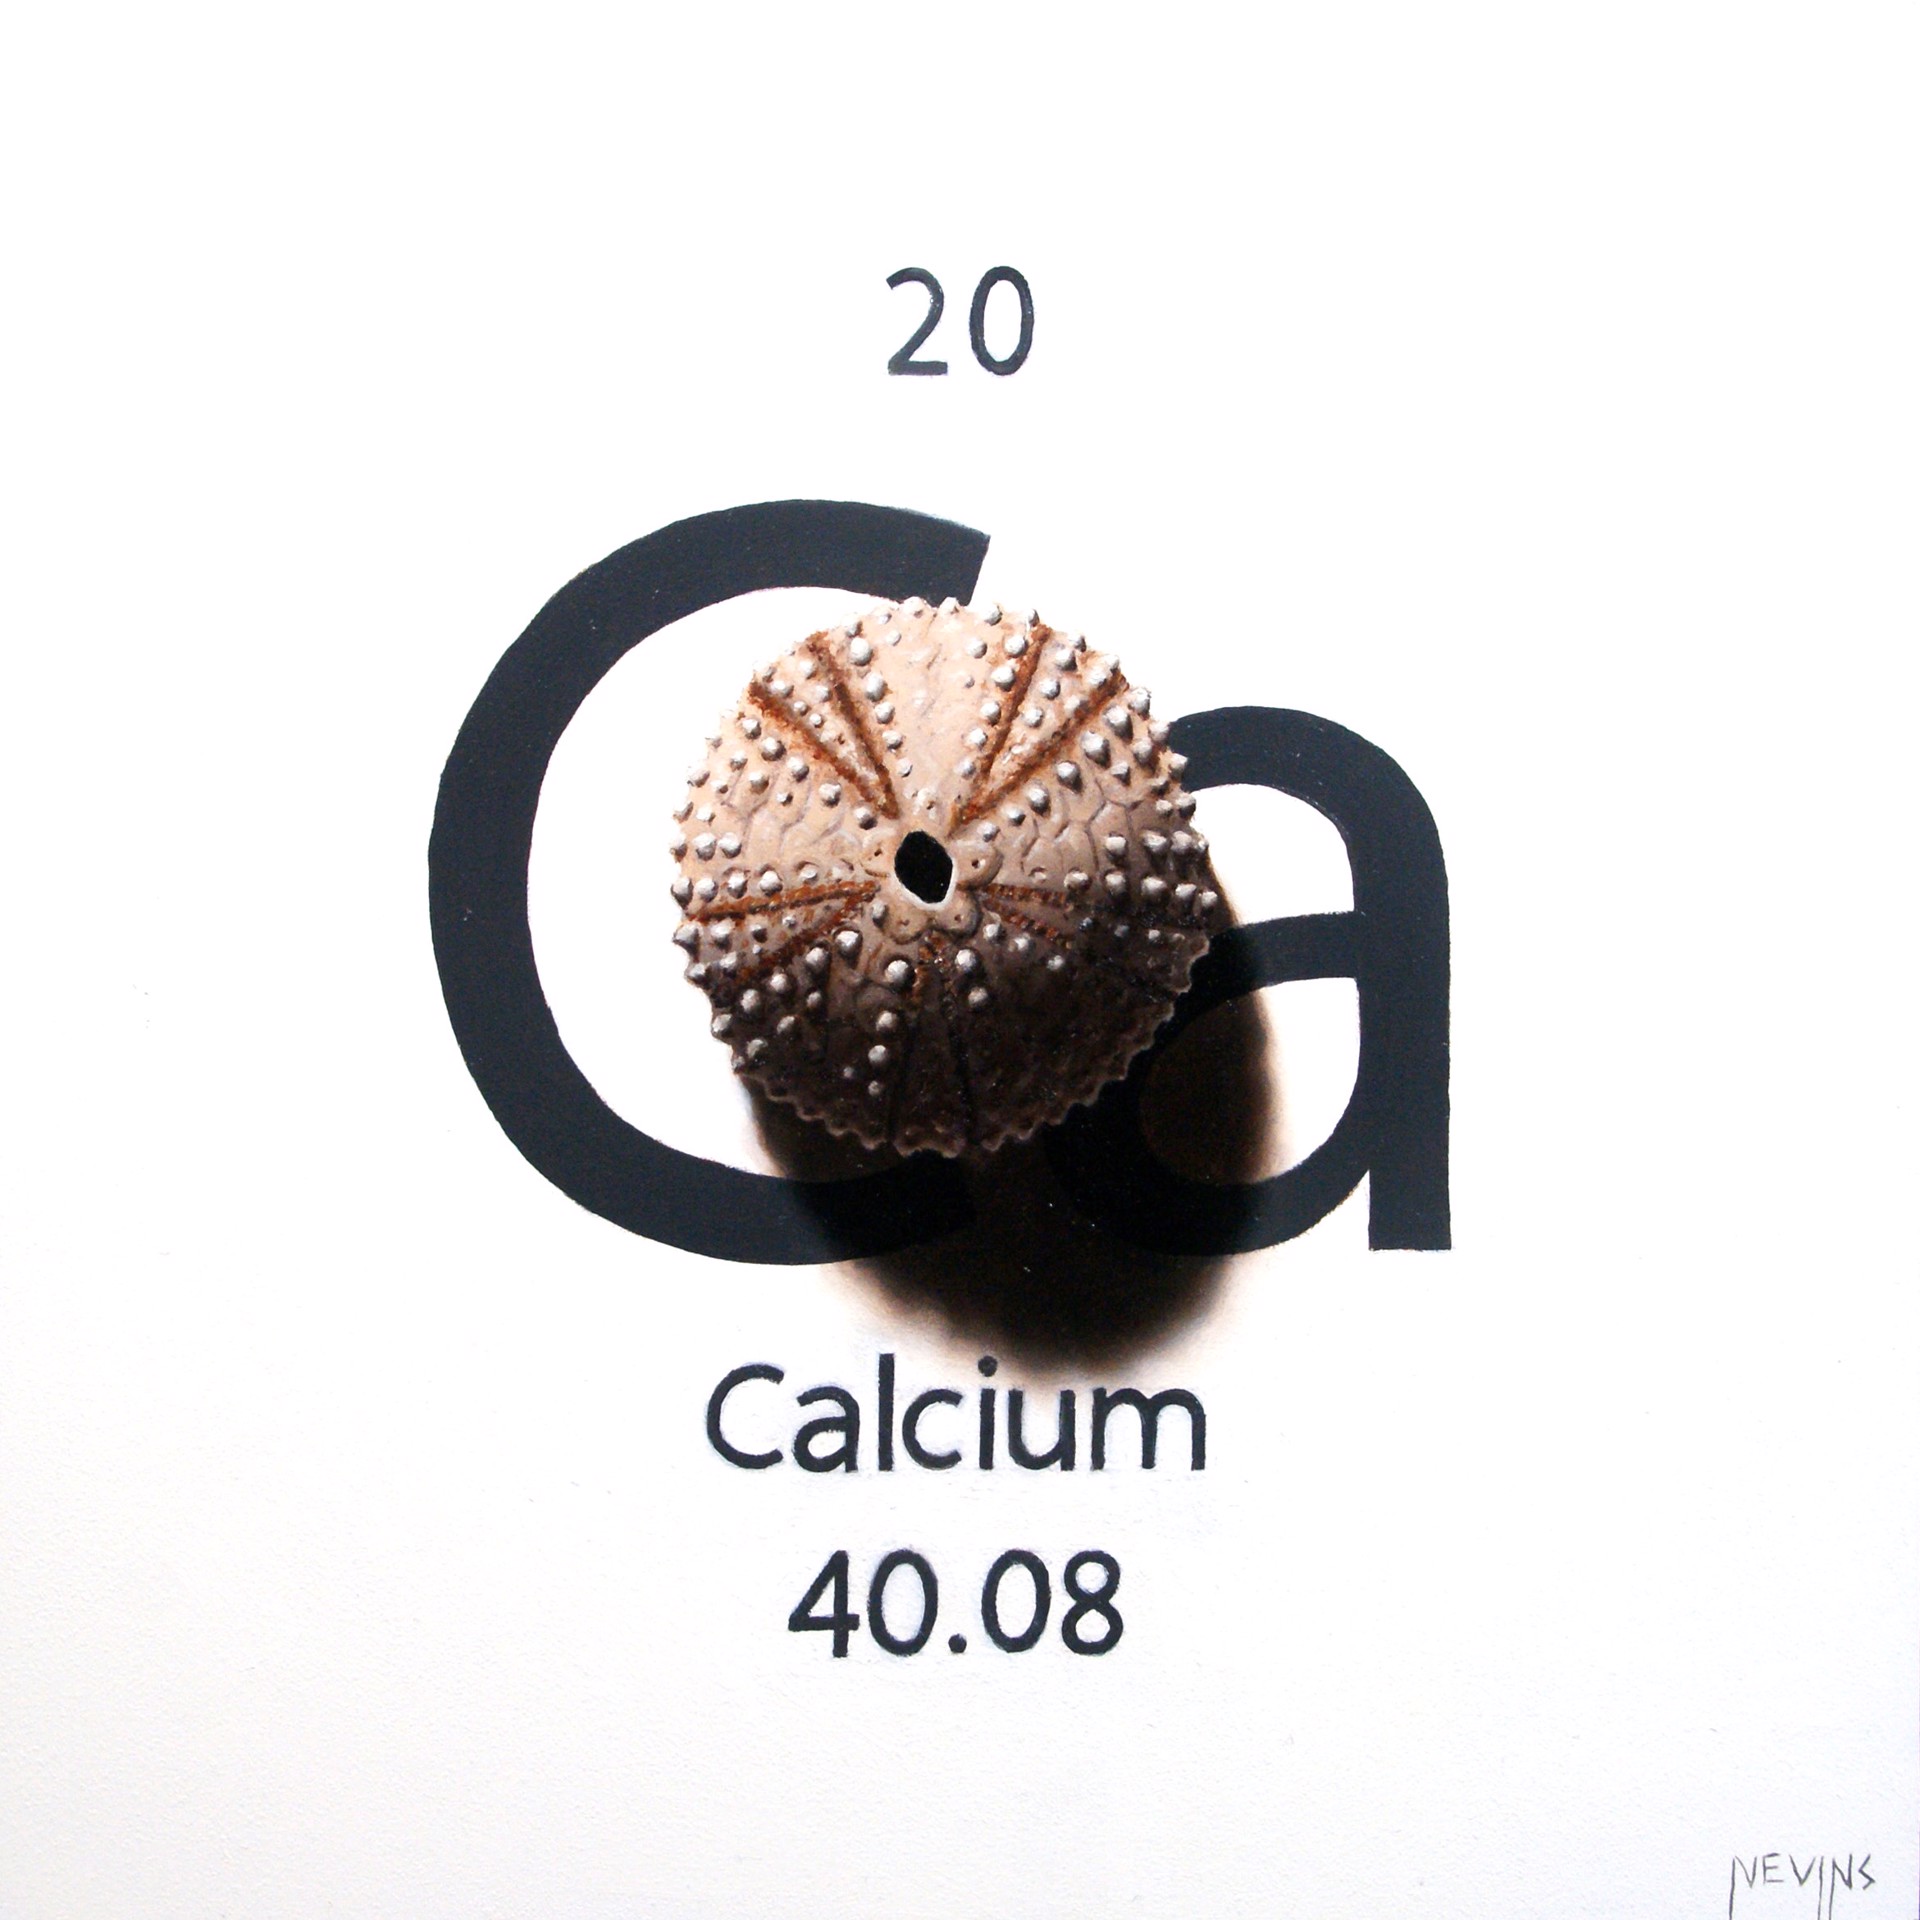 Calcium by Patrick Nevins